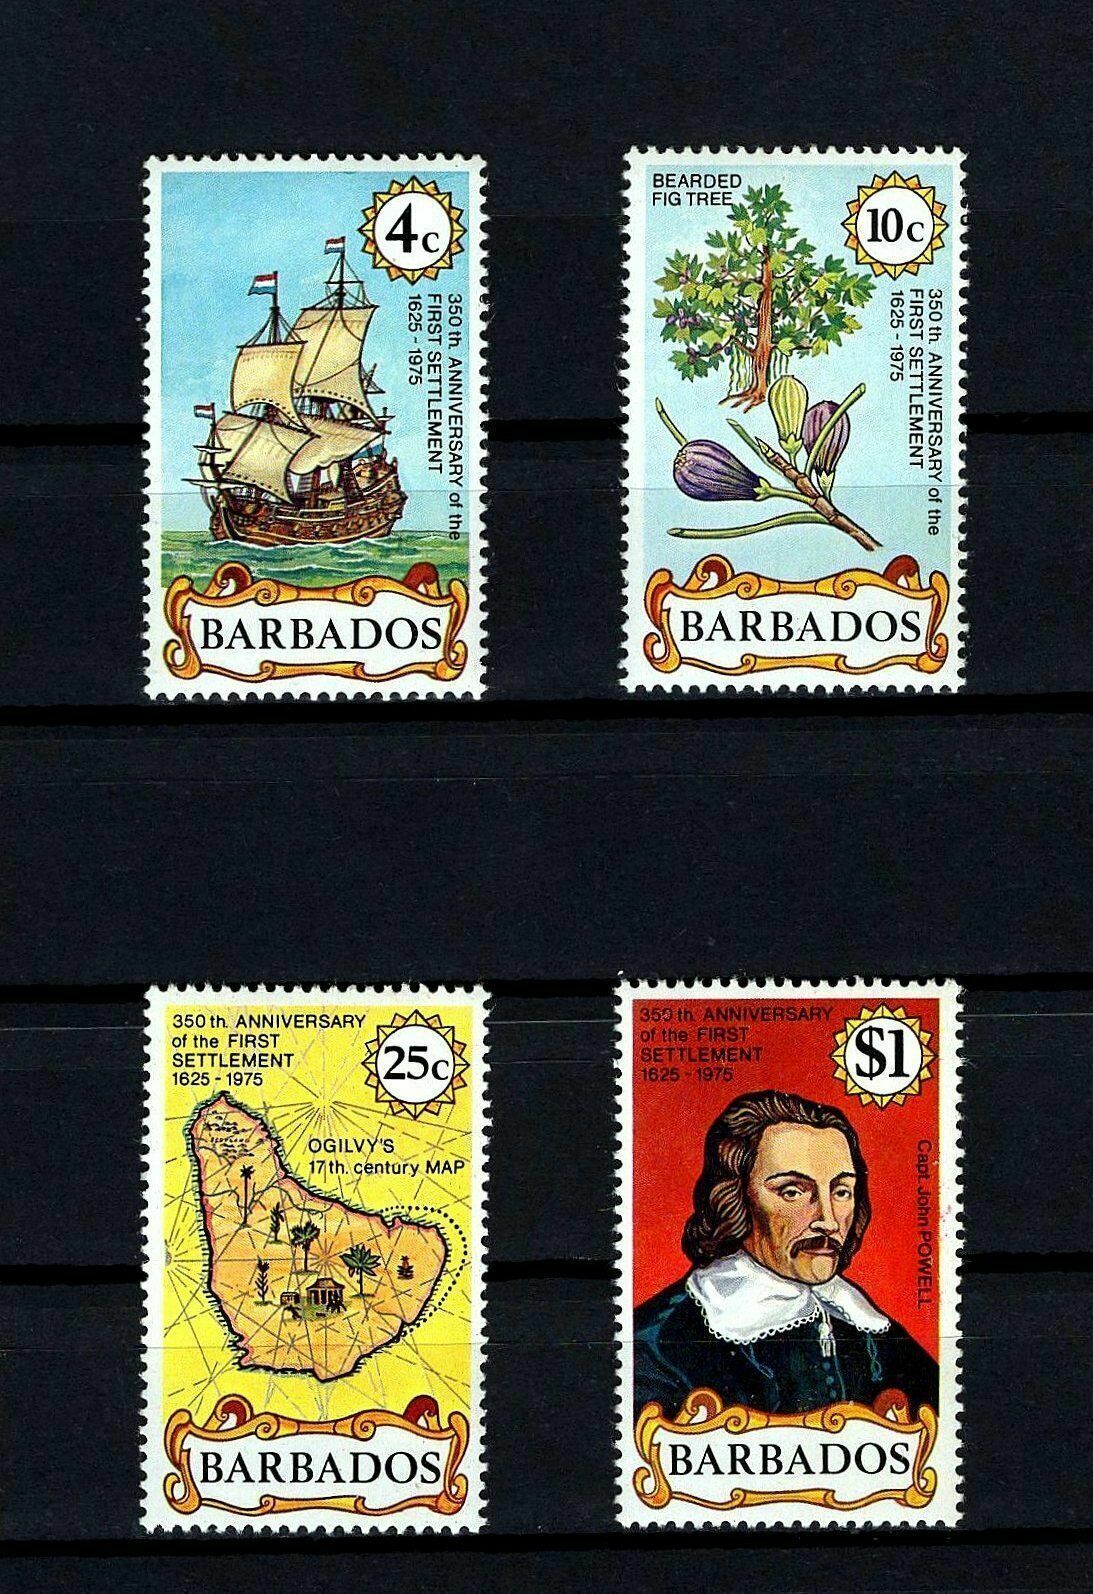 Barbados - 1975 - First Settlement - Sailing Ship - Fig Tree + Mint - Mnh Set!